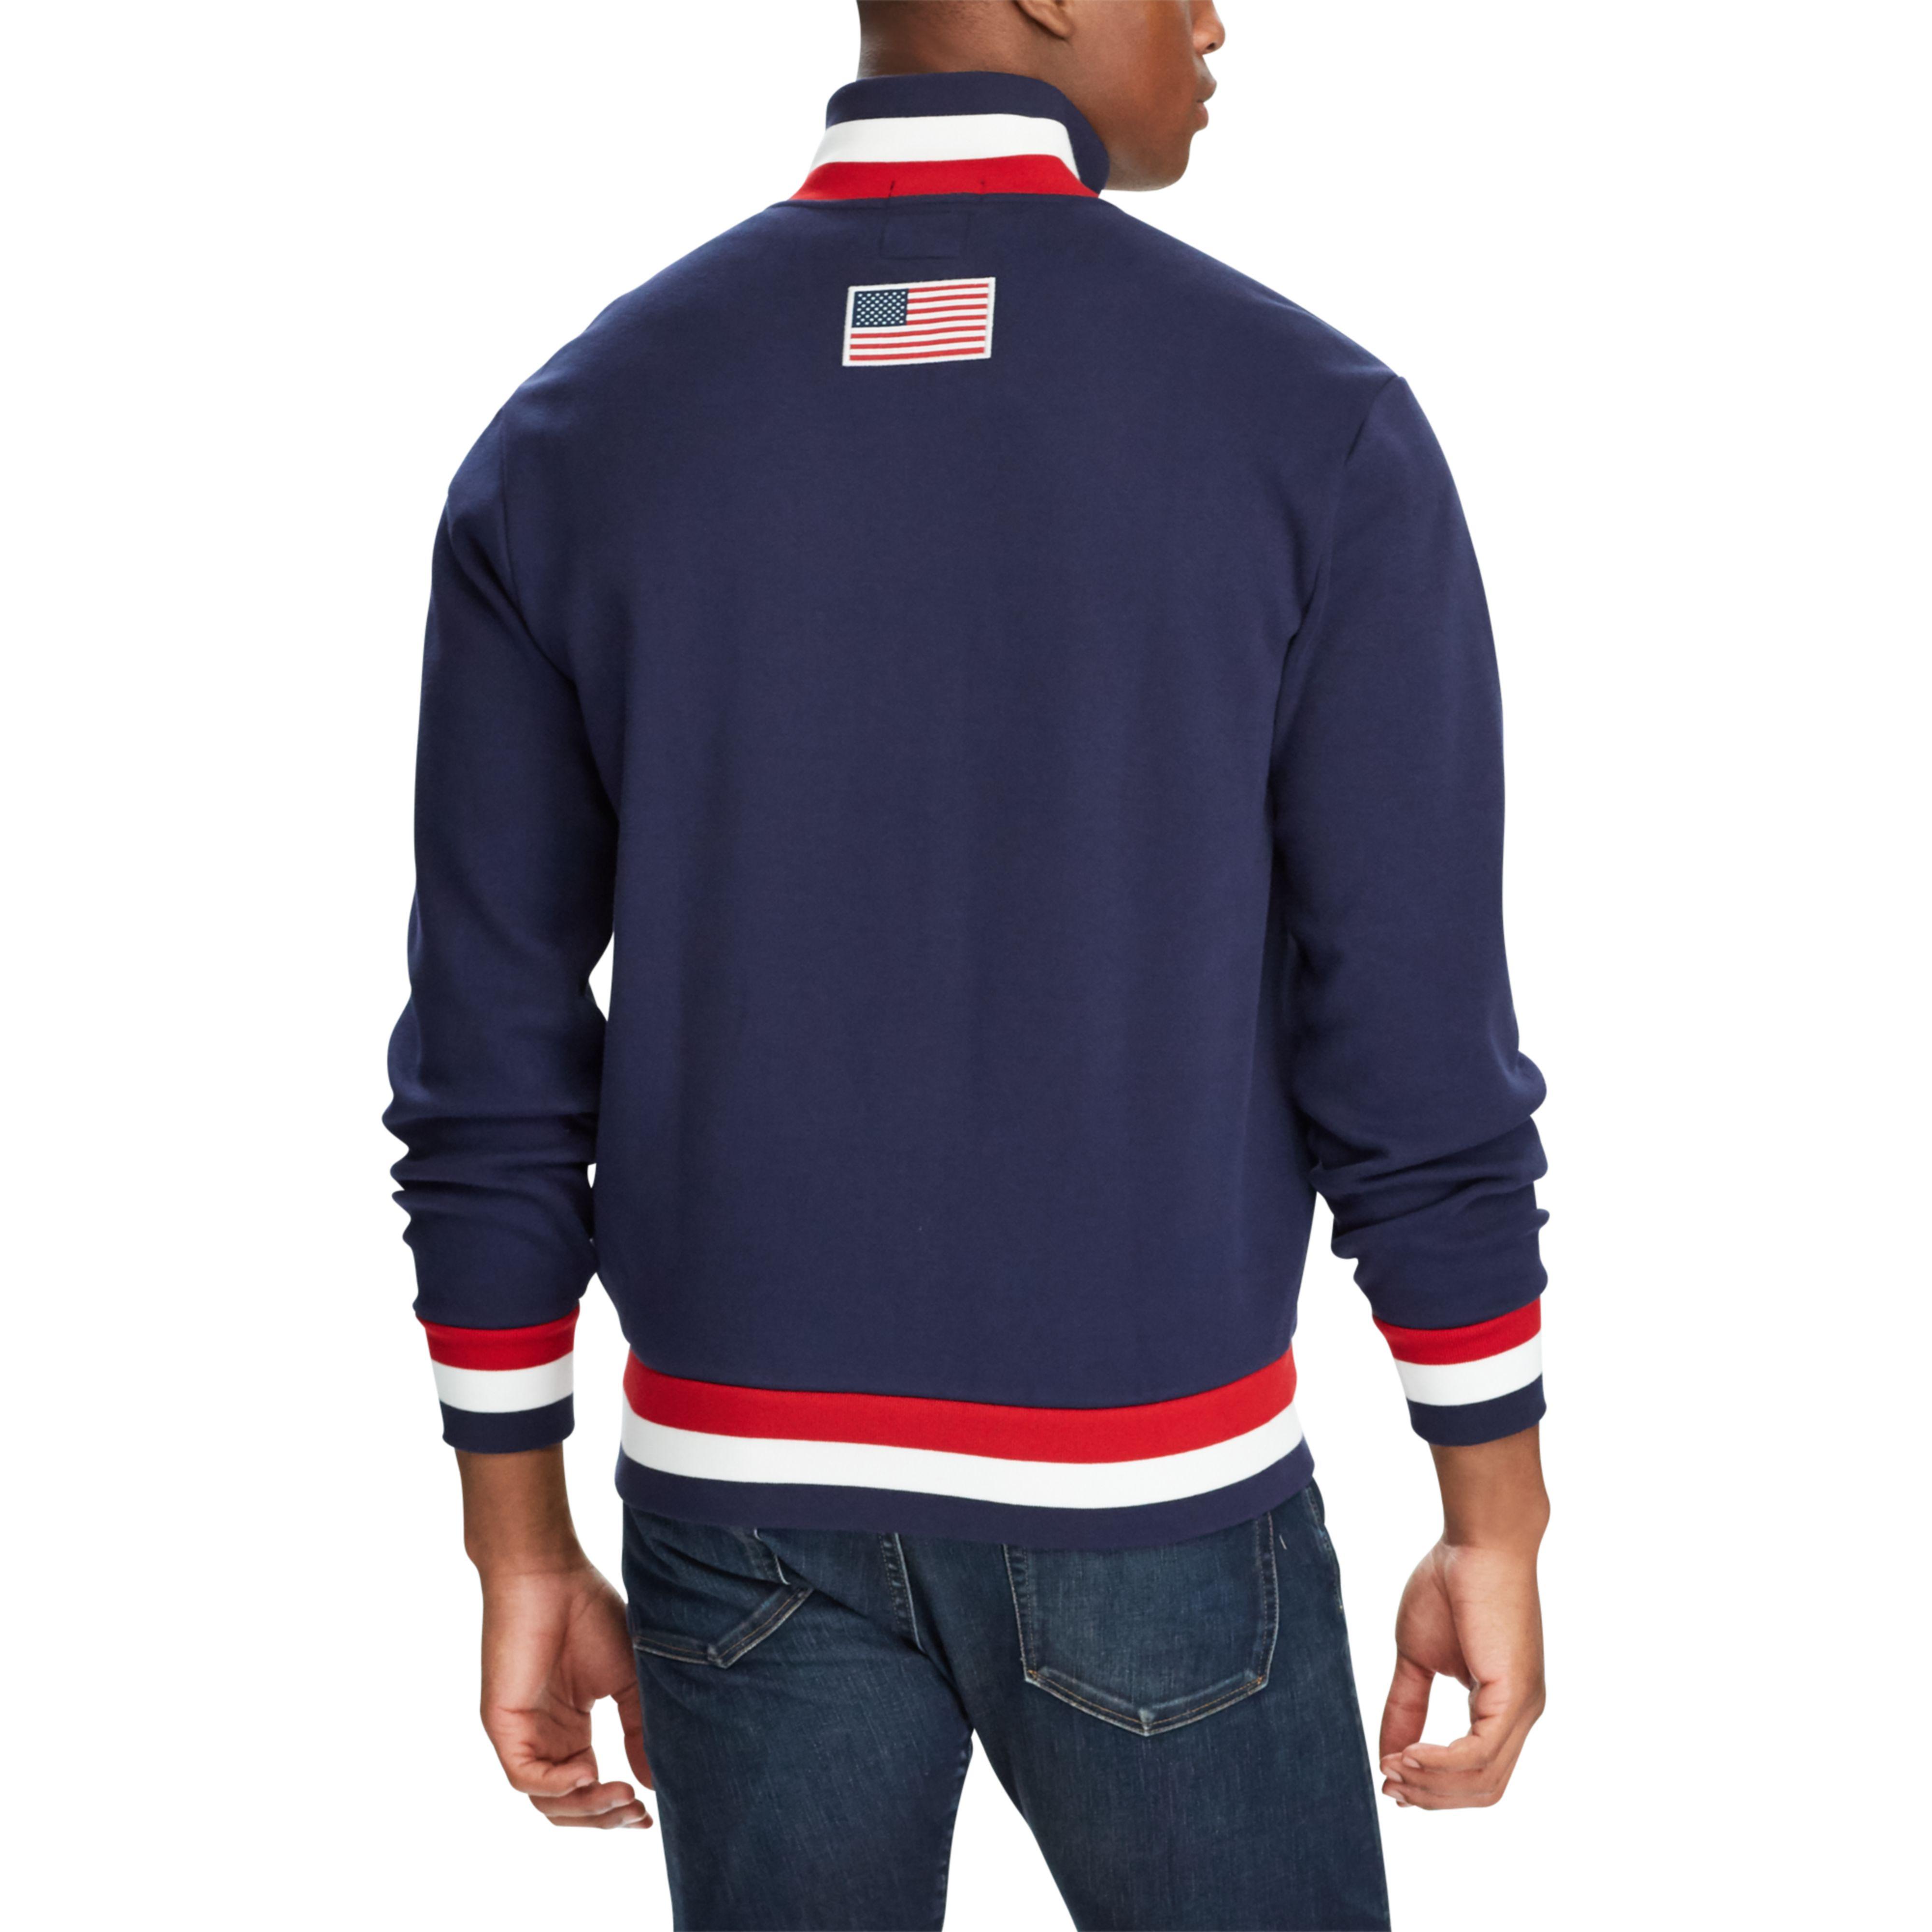 Lyst Polo Ralph Lauren Team Usa Fleece Track Jacket in Blue for Men